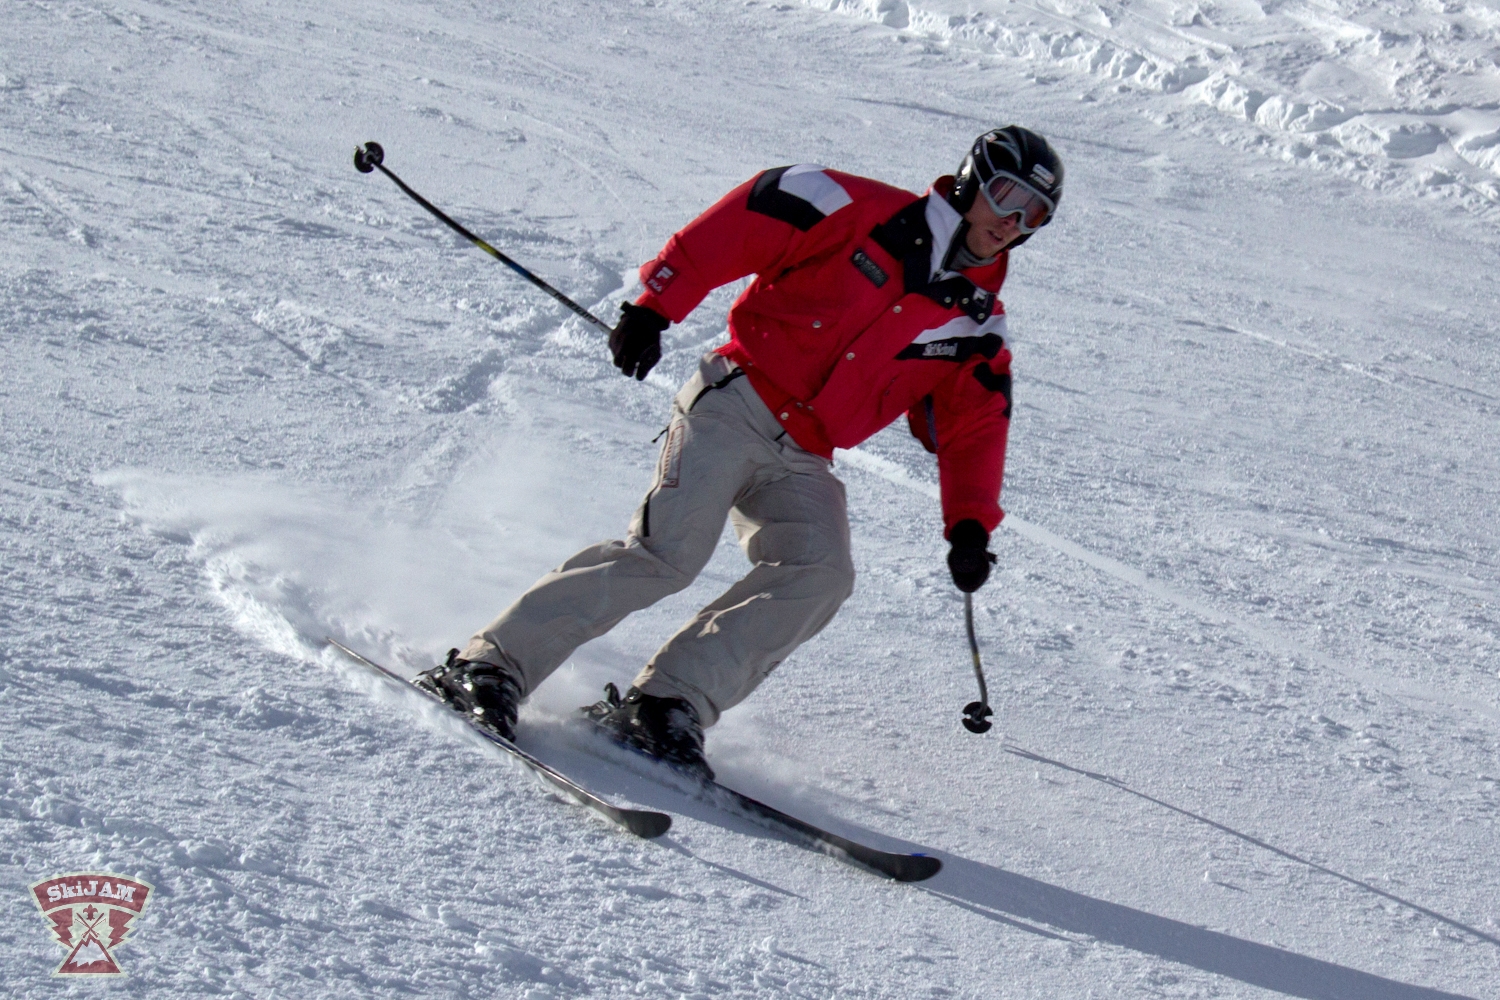 2013-skijam-havasi-mate-013.jpg